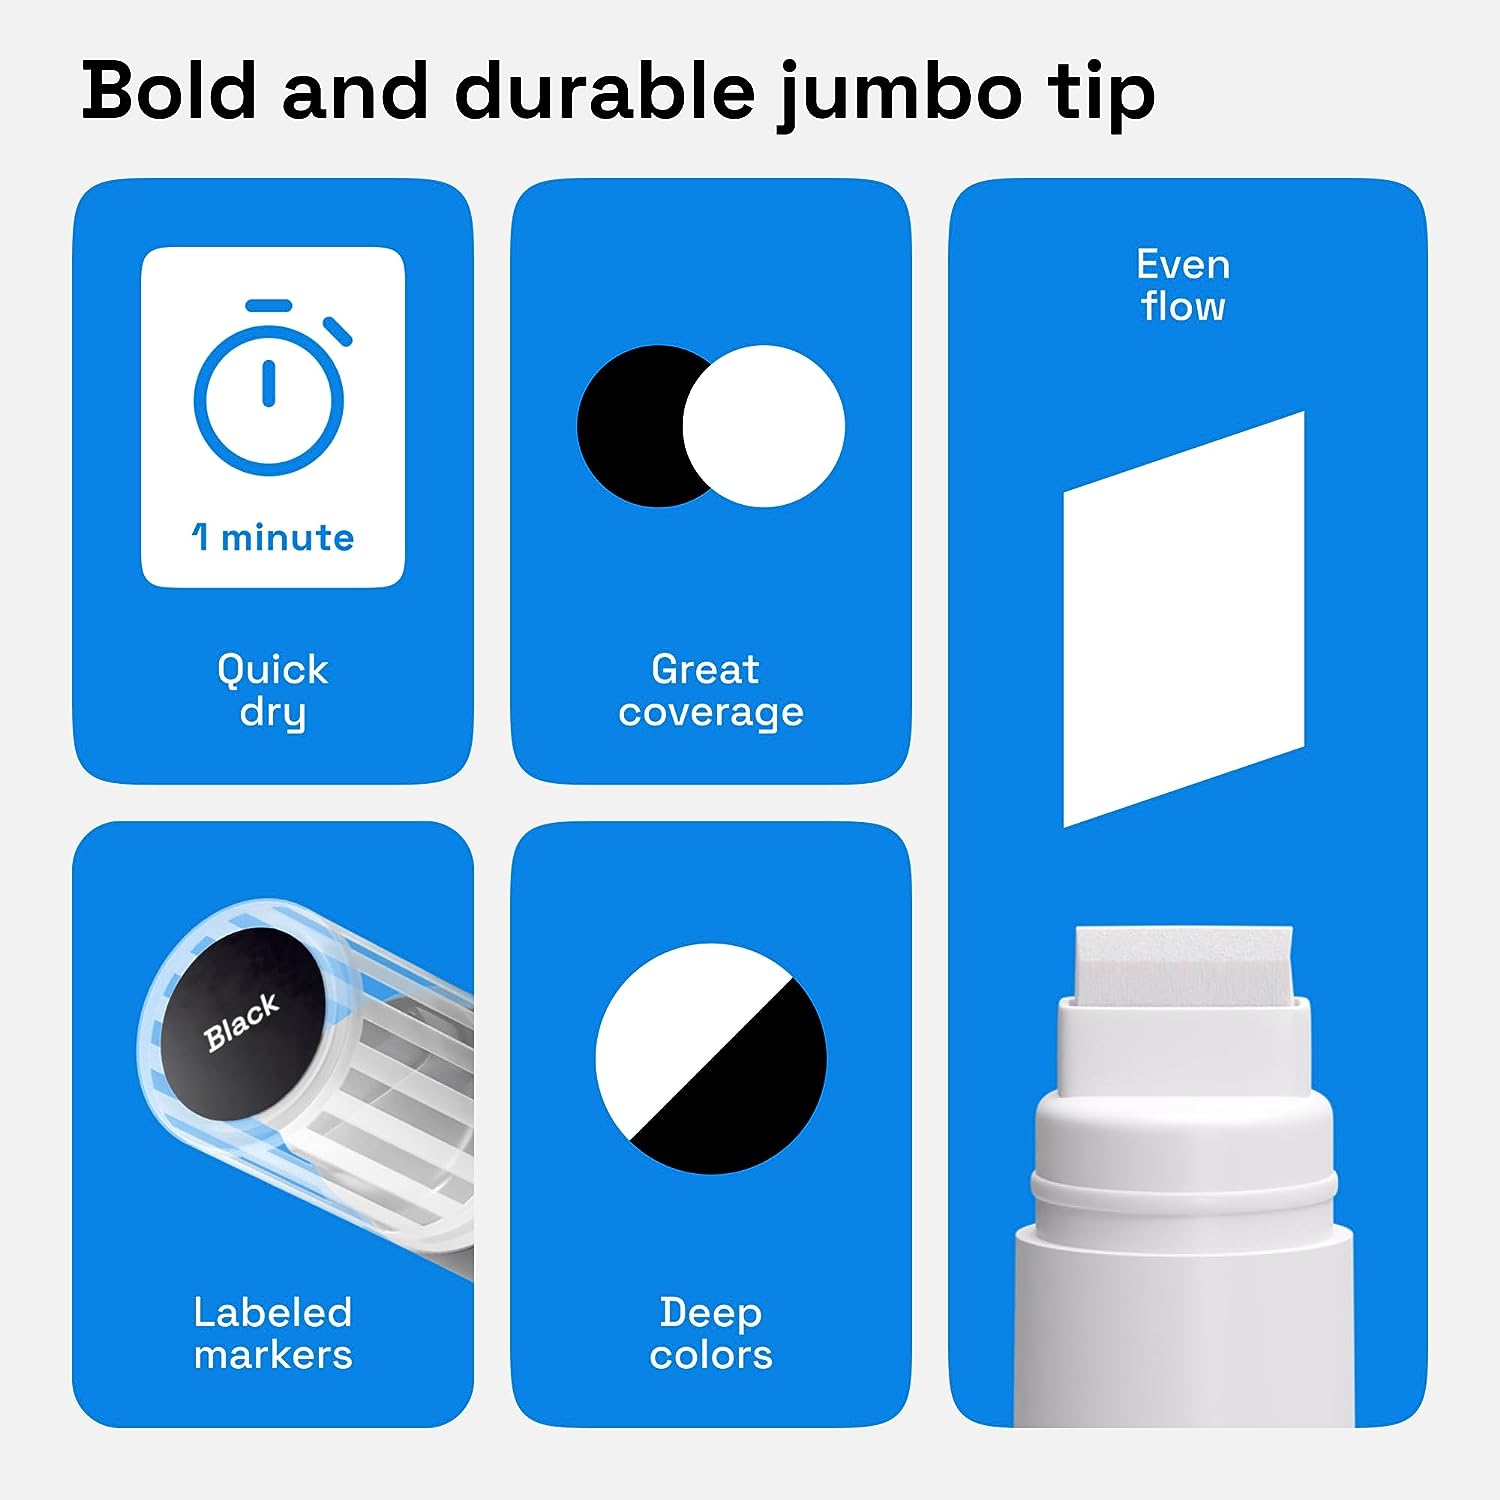 bold and durable jumbo tip